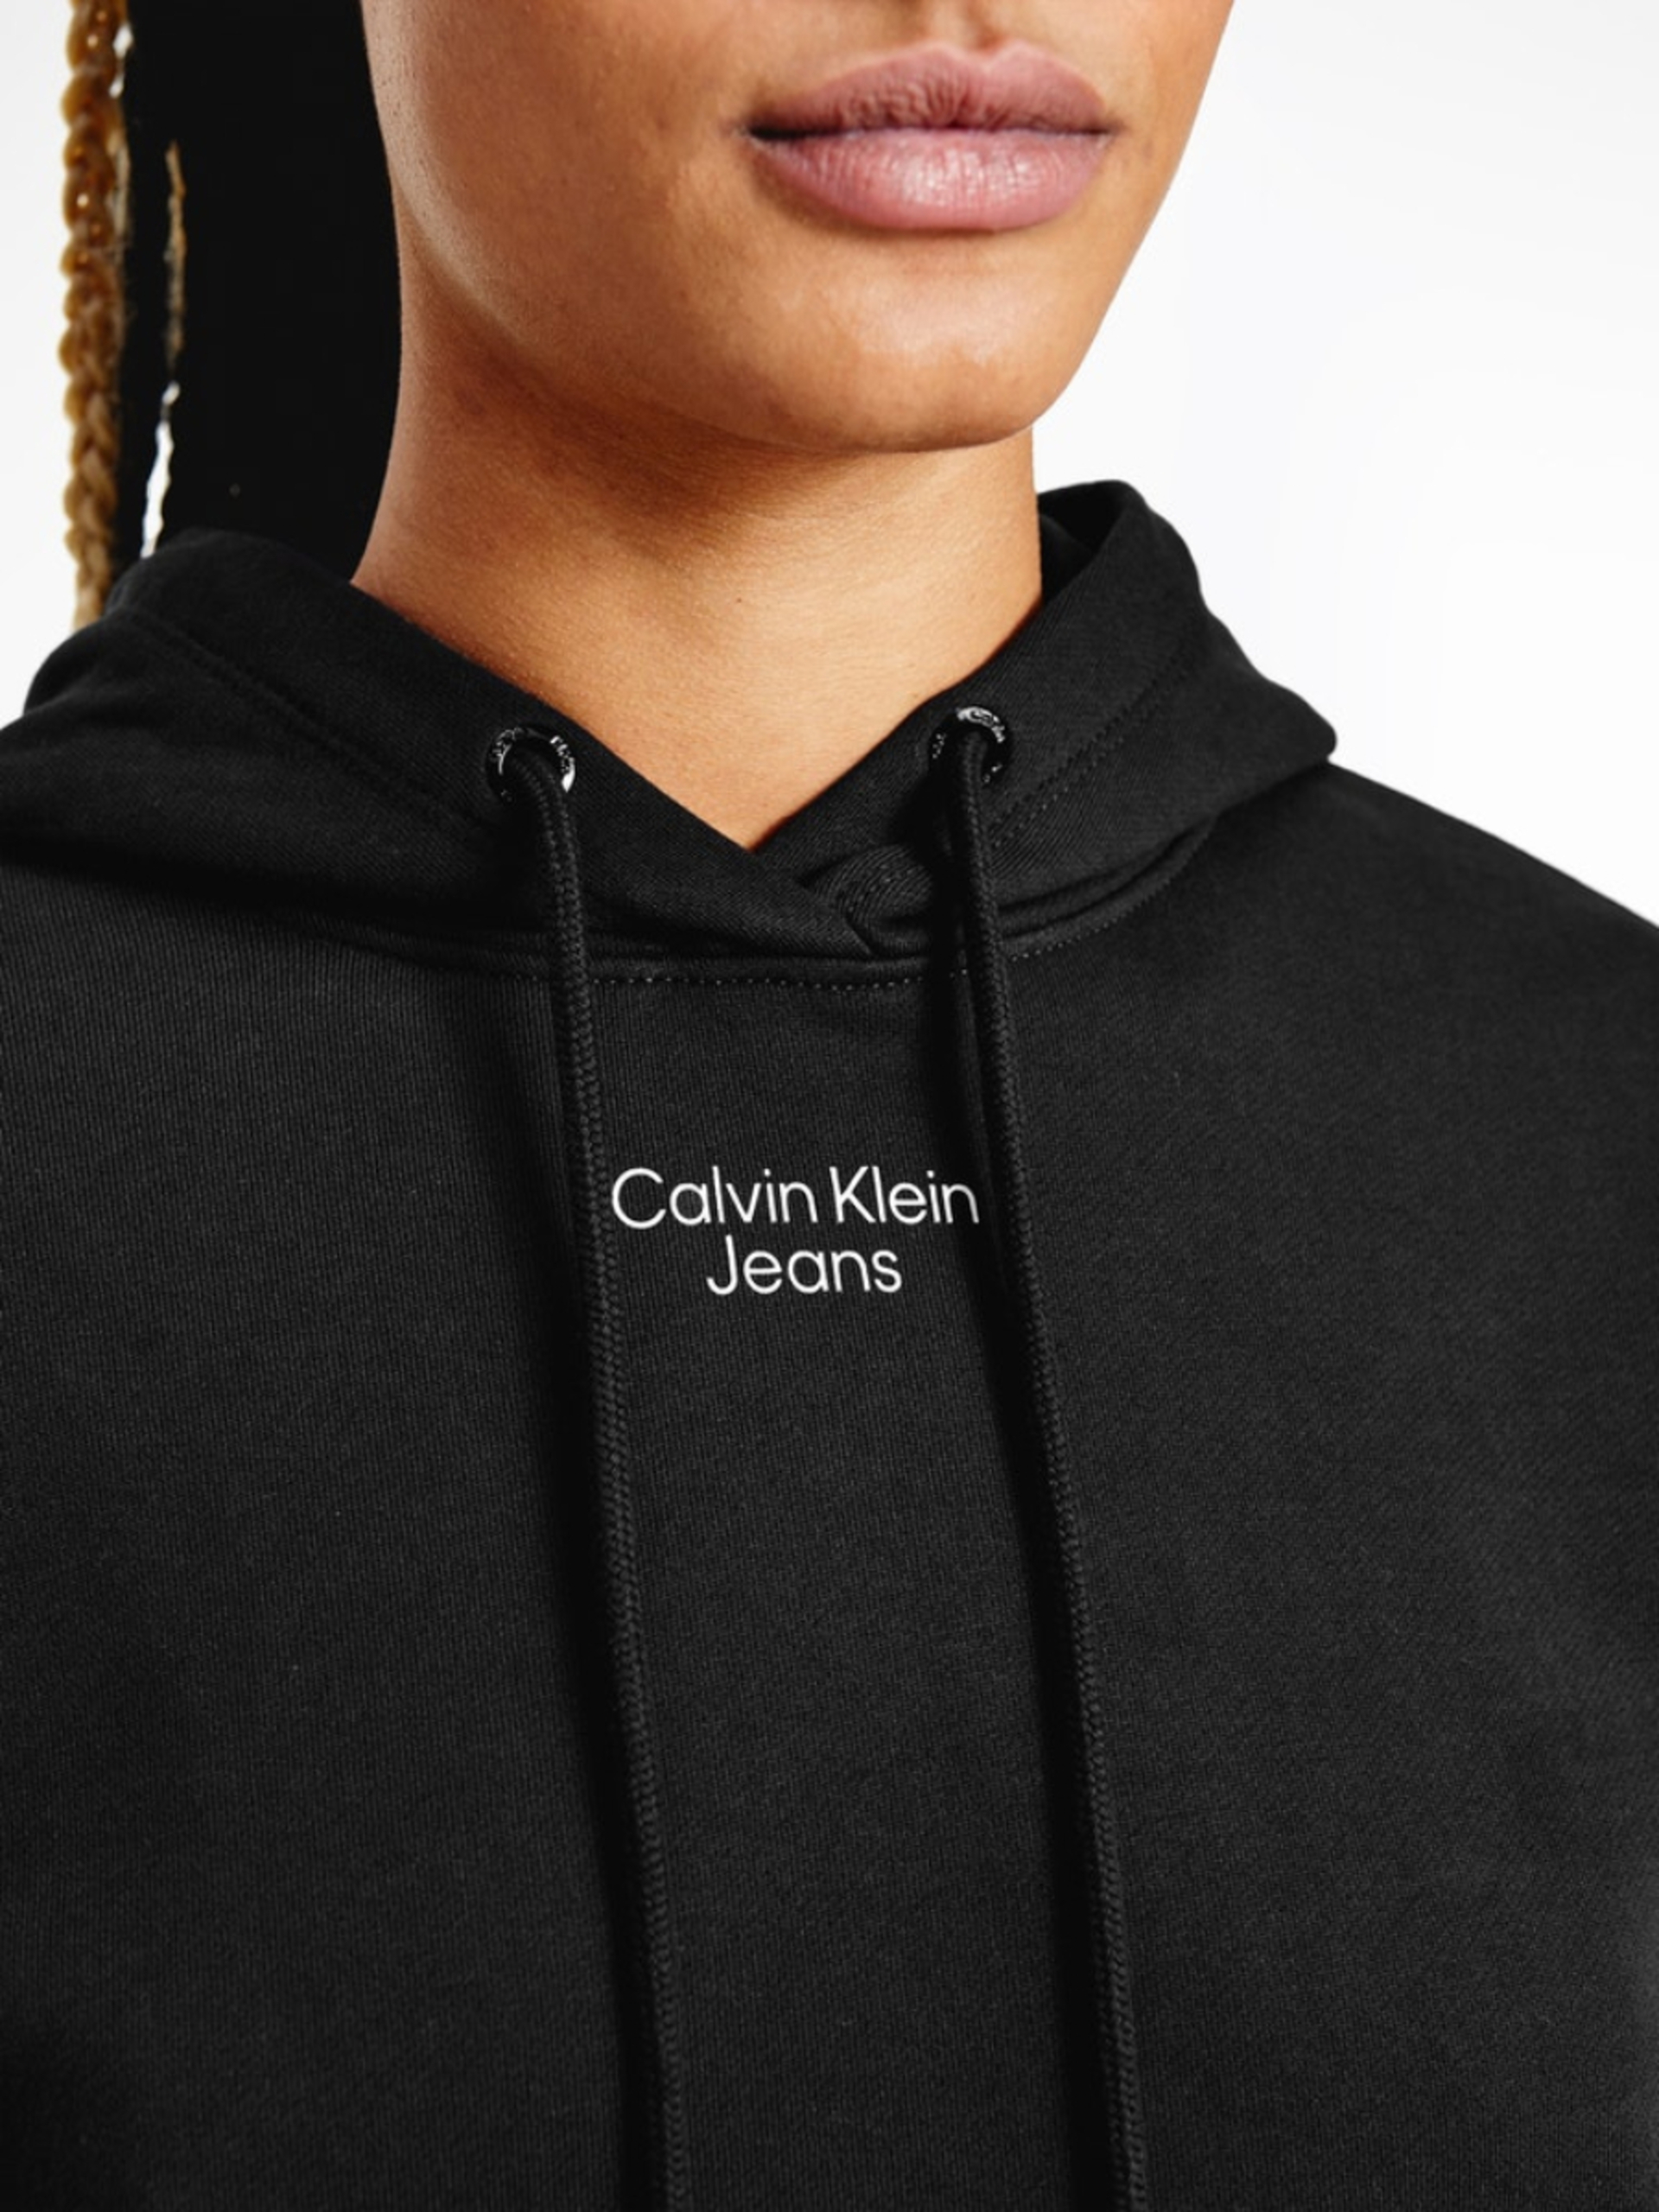 Calvin Klein dámská černá mikina - L (BEH)